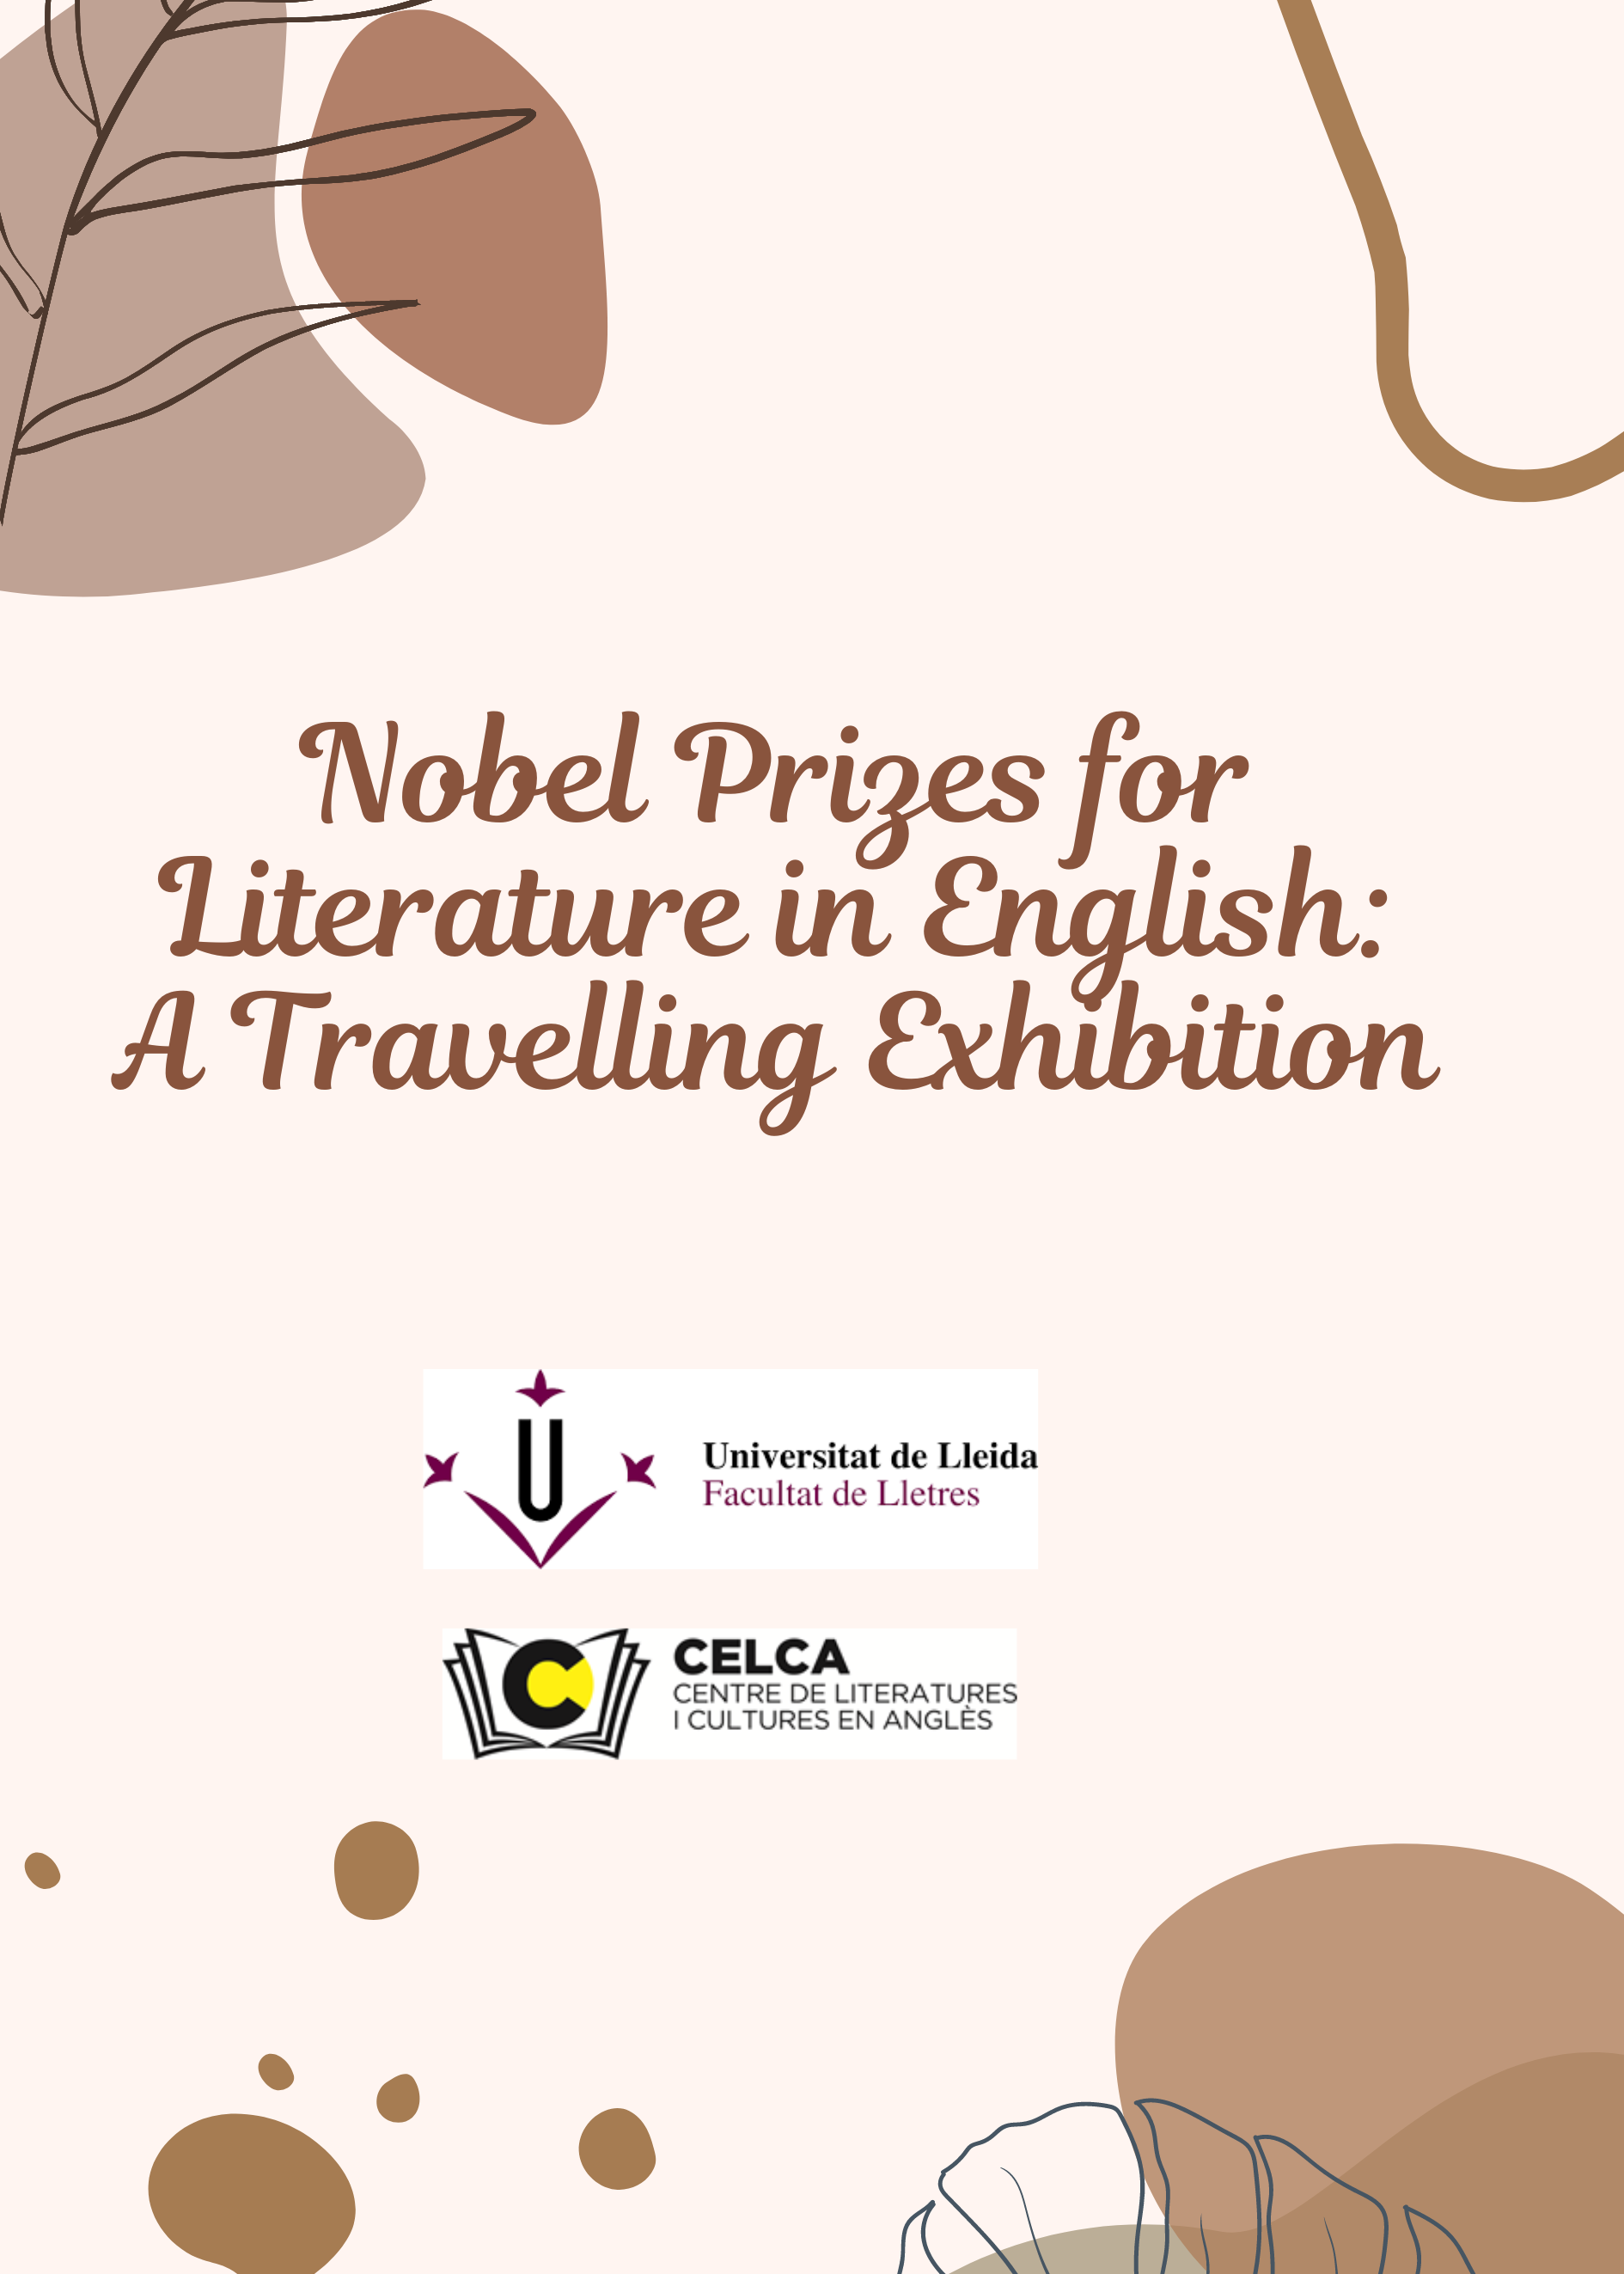 Portada exhibició Nobel Price for Literature in English